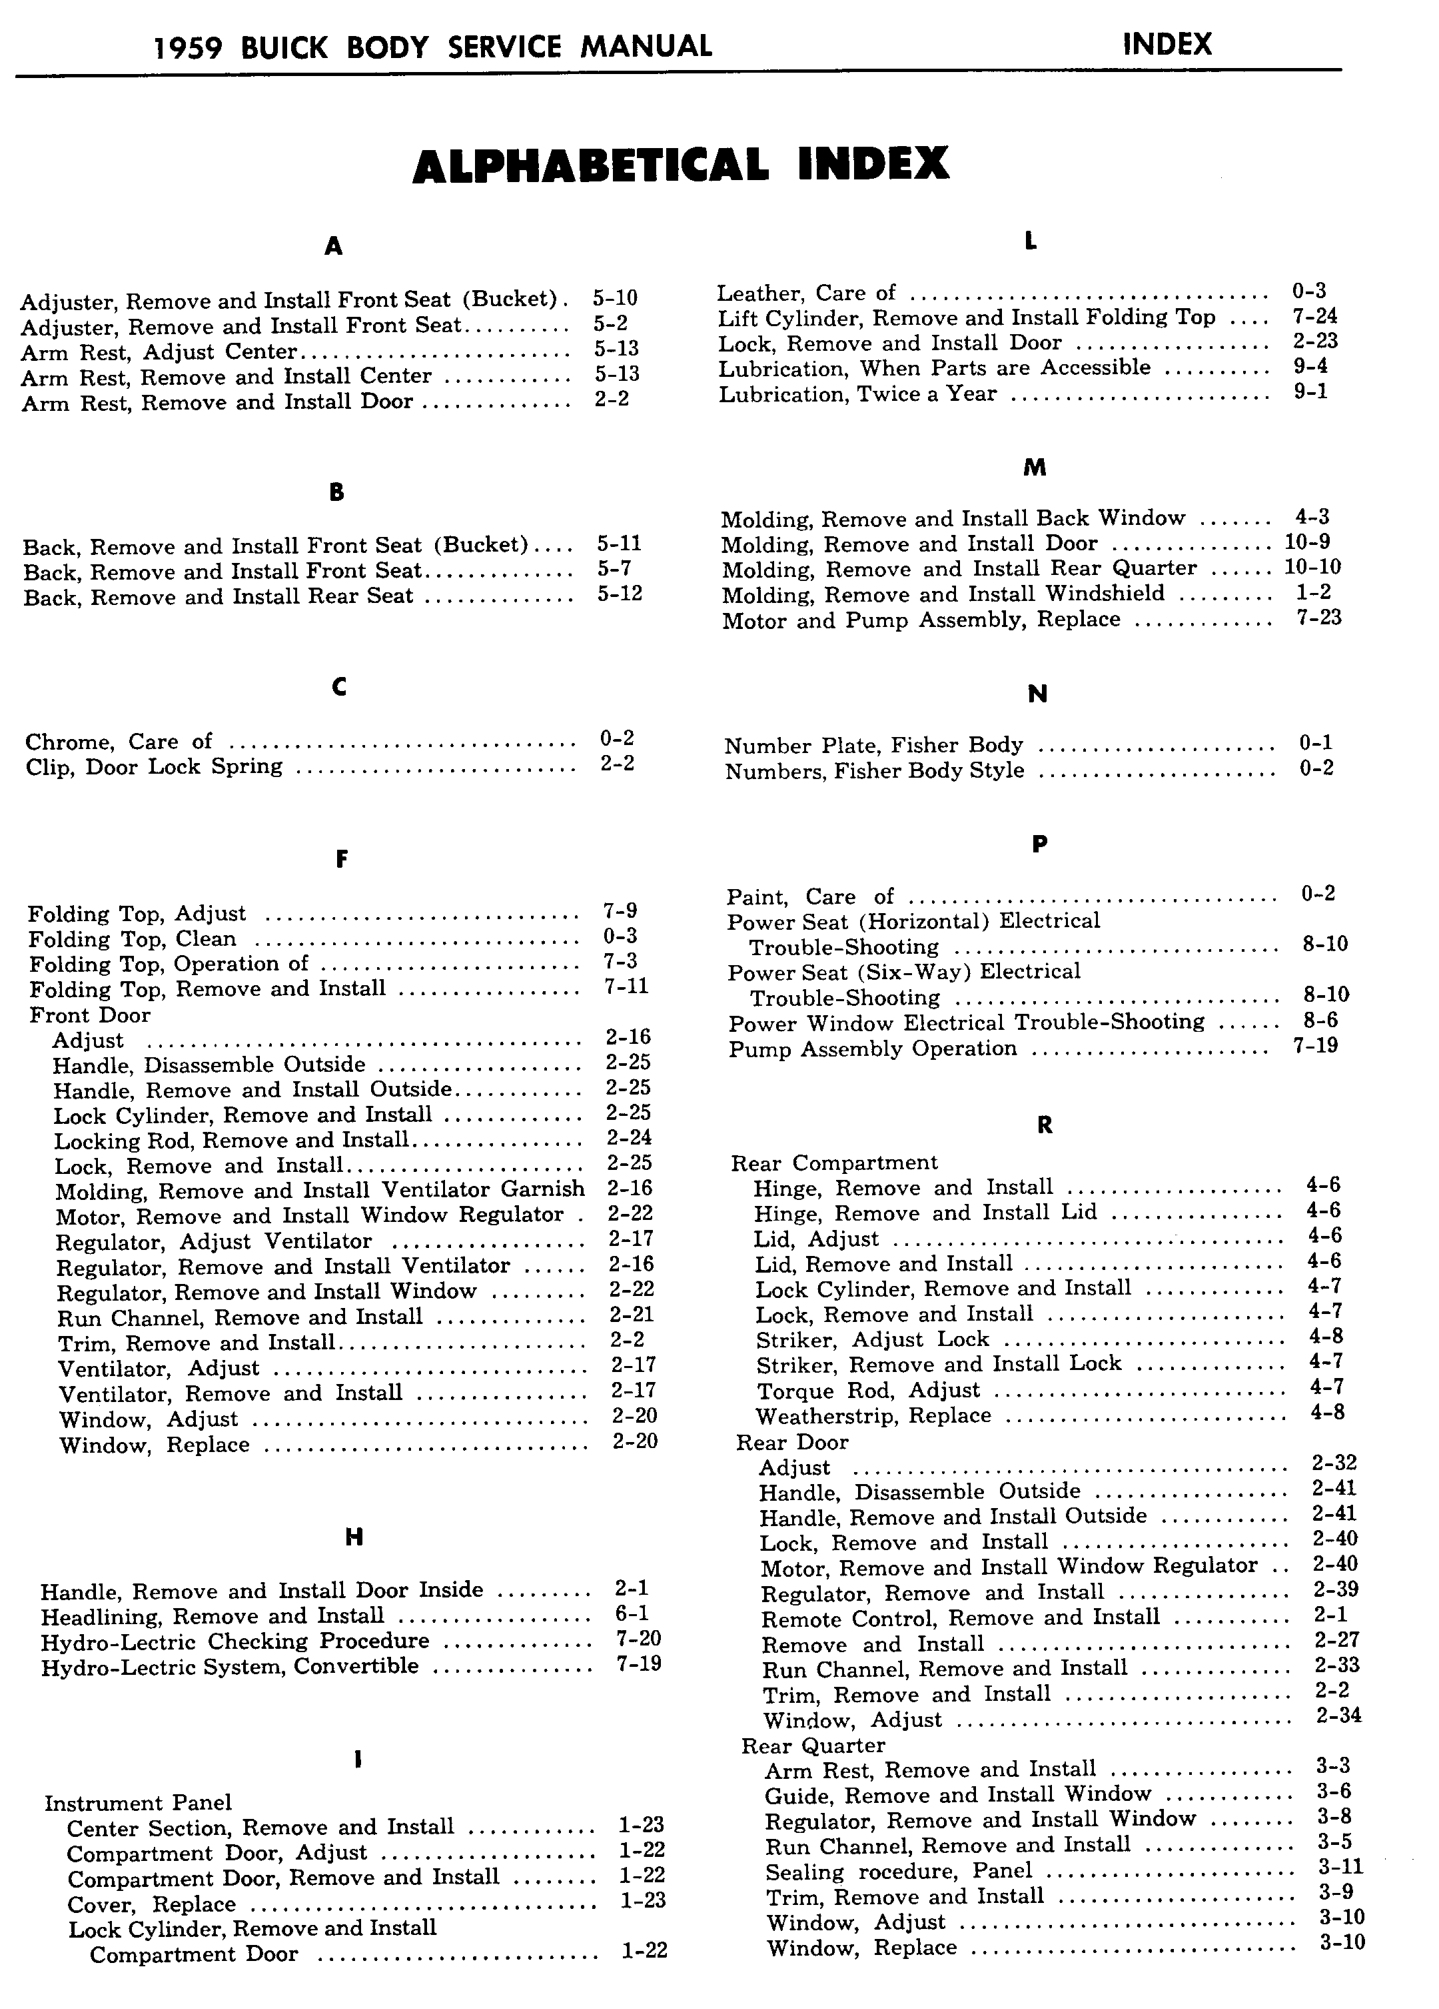 n_12 1959 Buick Body Service-Index_1.jpg